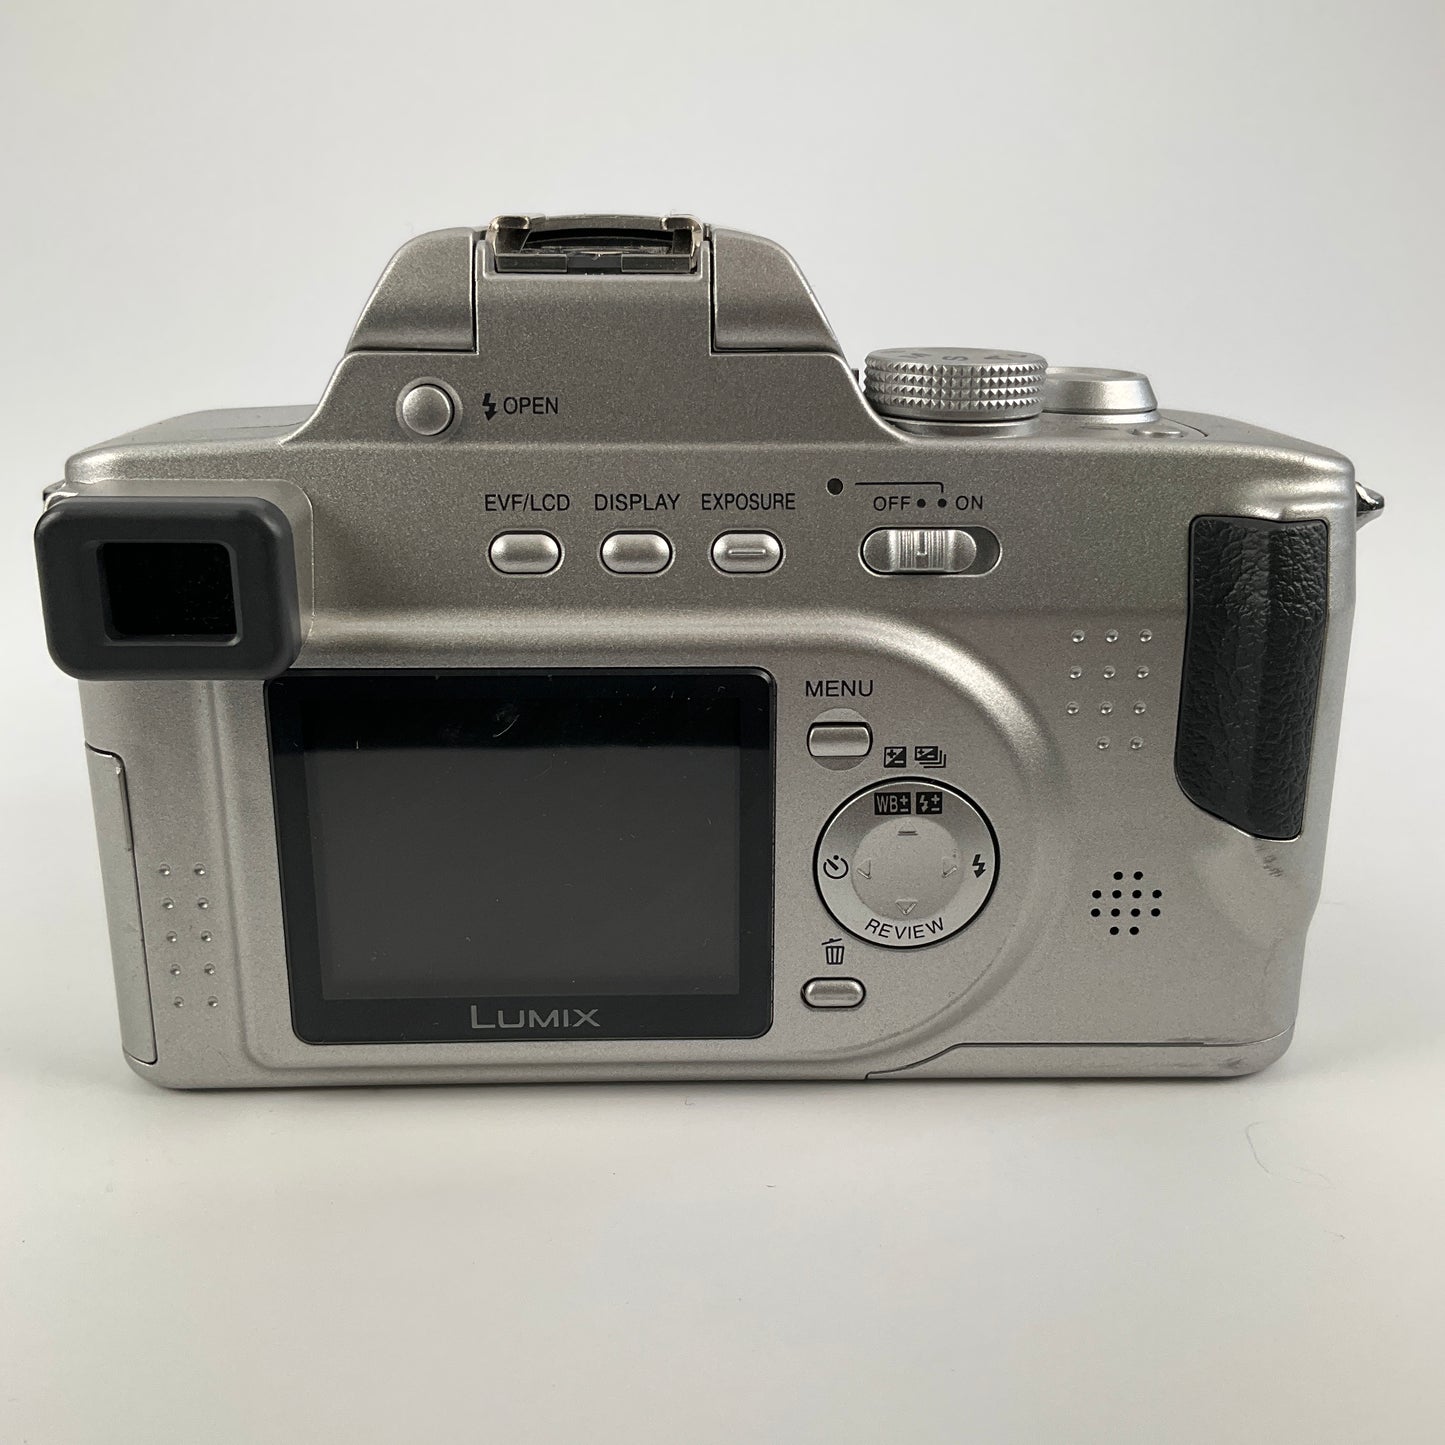 Panasonic - Lumix DMC-FZ20 Digital Camera